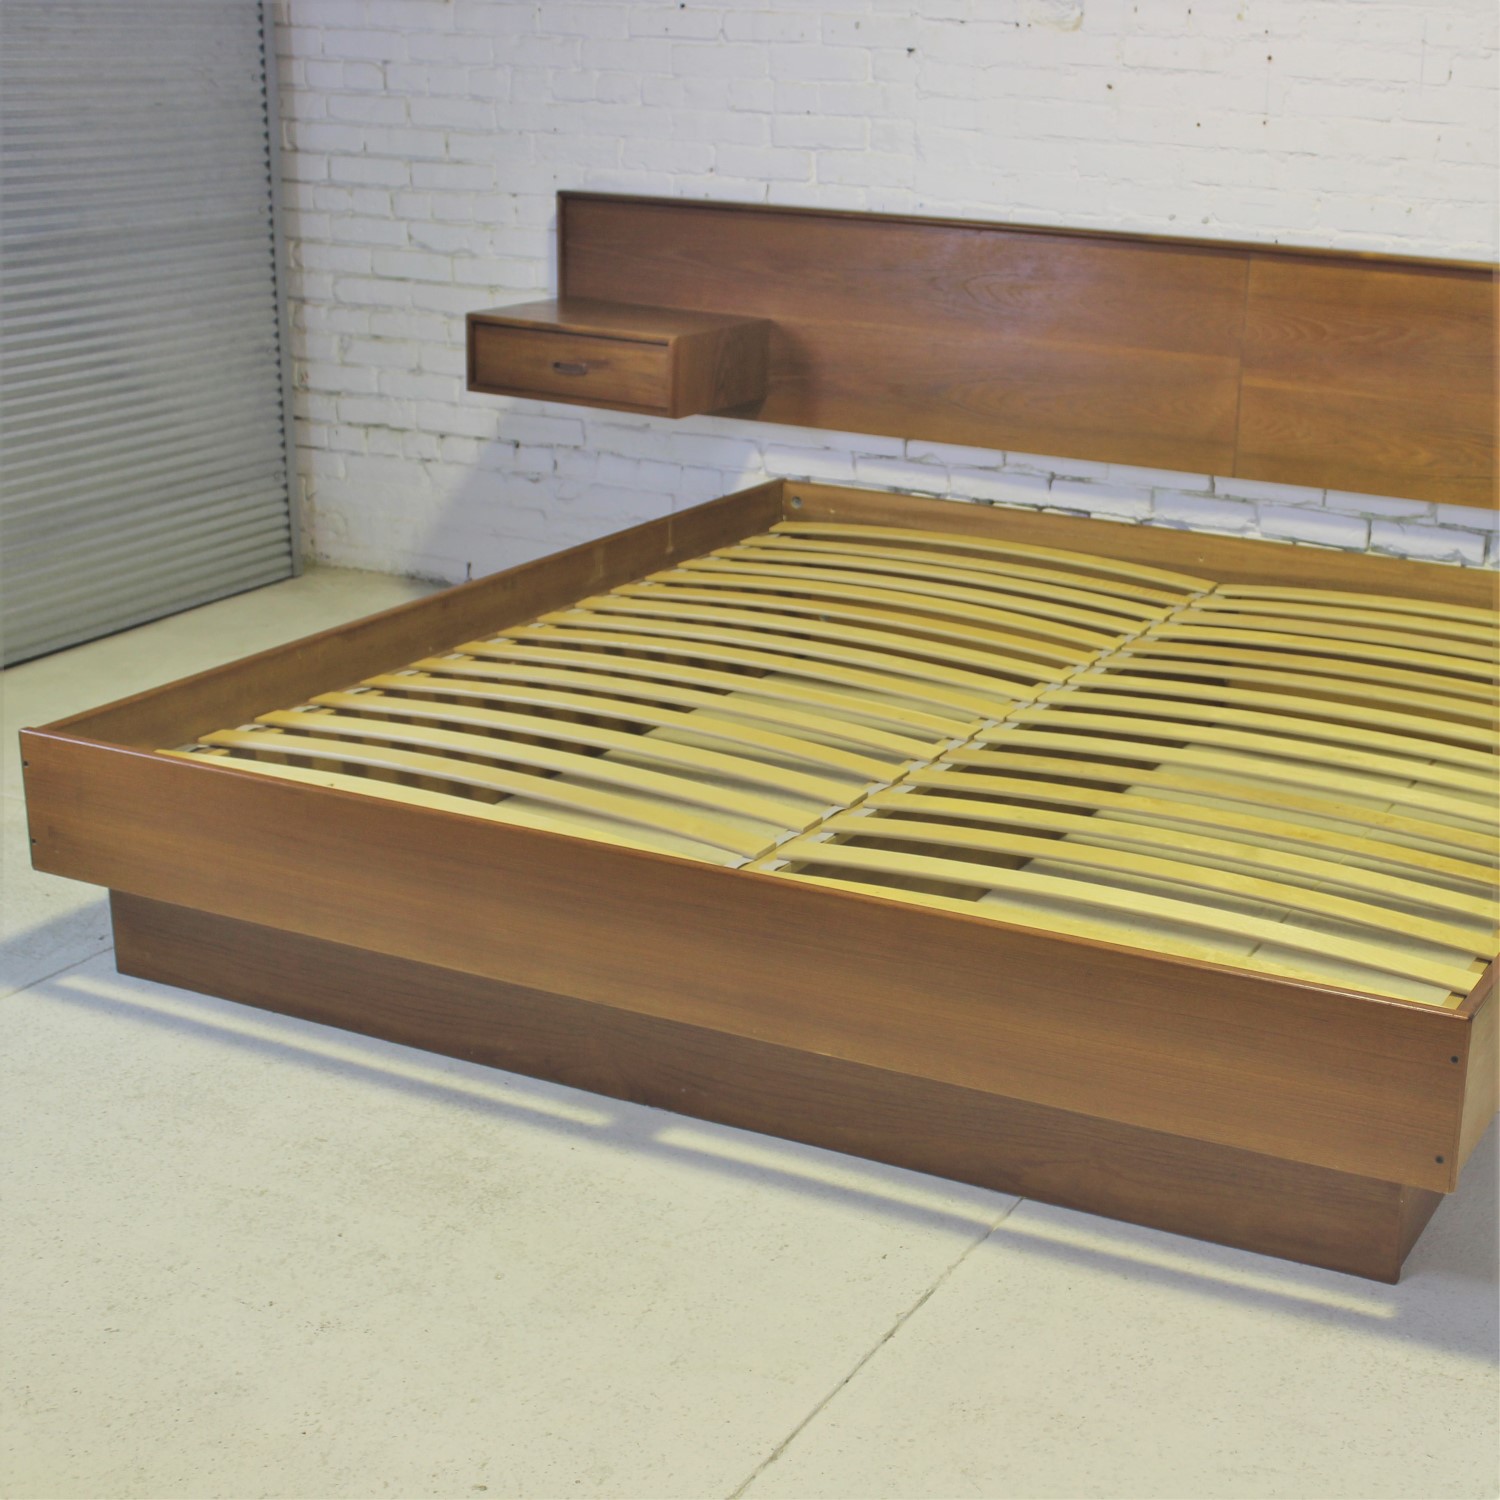 Vintage Scandinavian Modern Teak King Platform Bed with Attached Night Stands